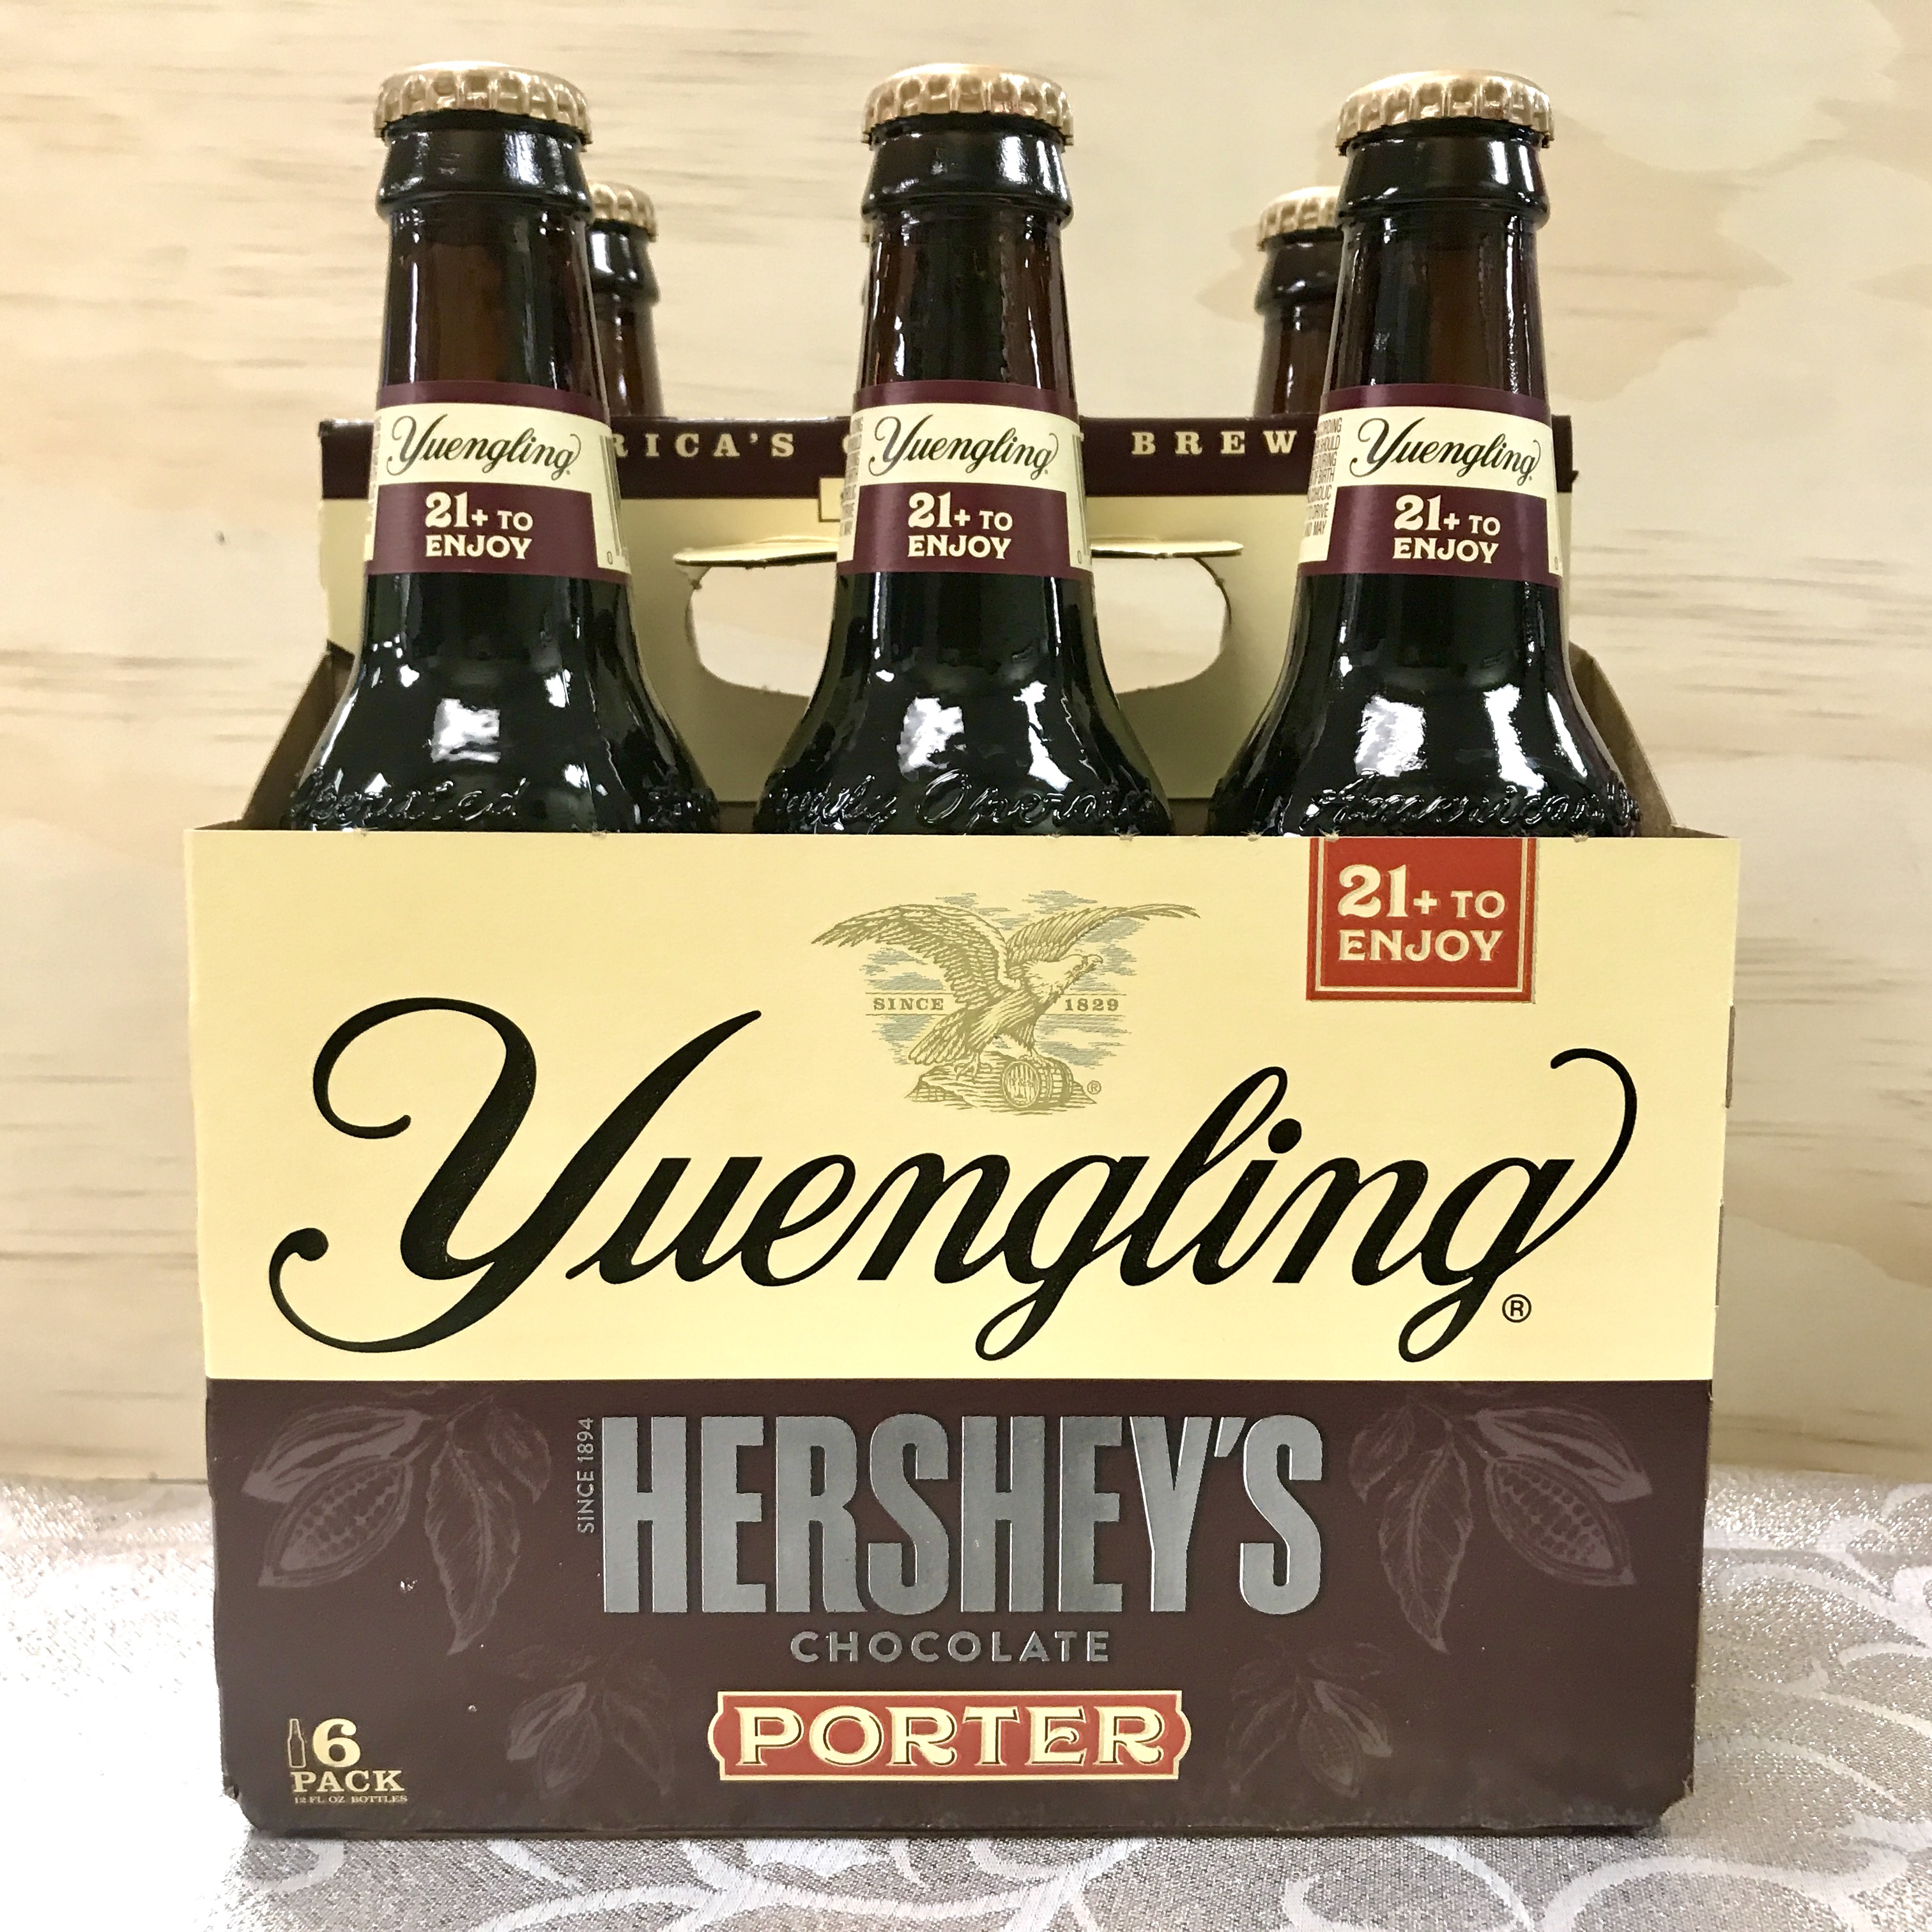 Yuengling Hershey's Chocolate Porter 6 x 12oz bottles